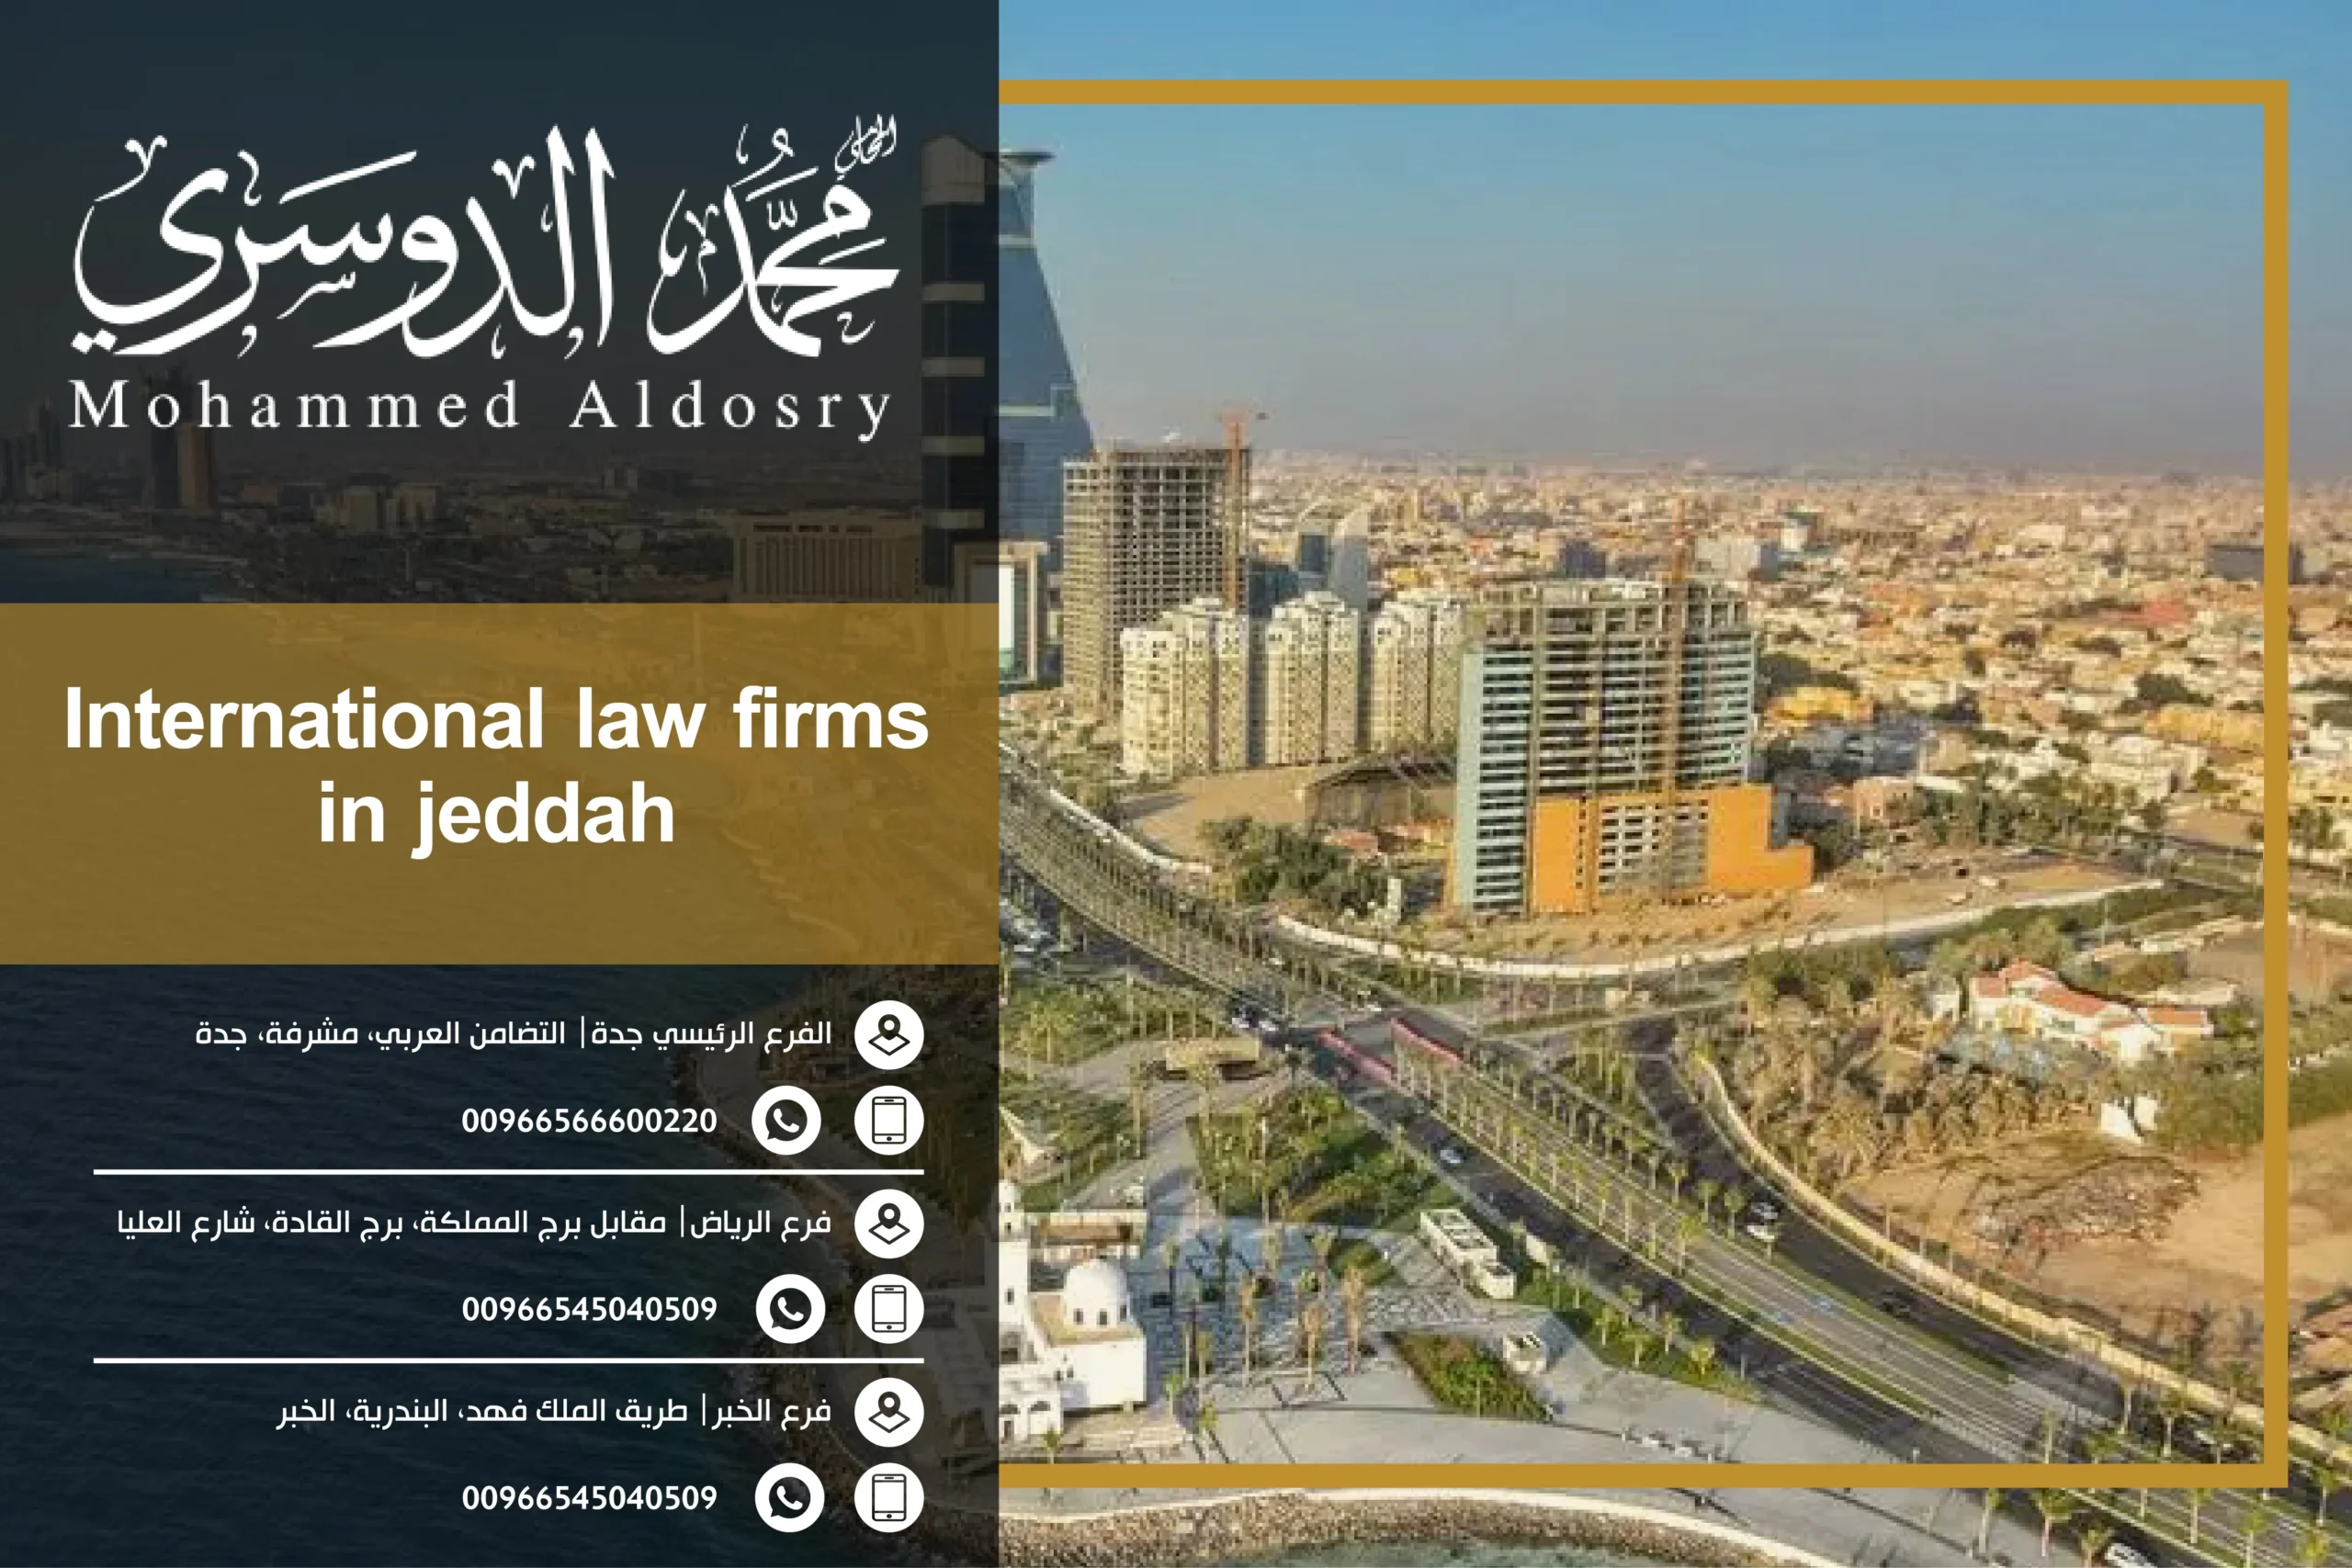  International law firms in Jeddah